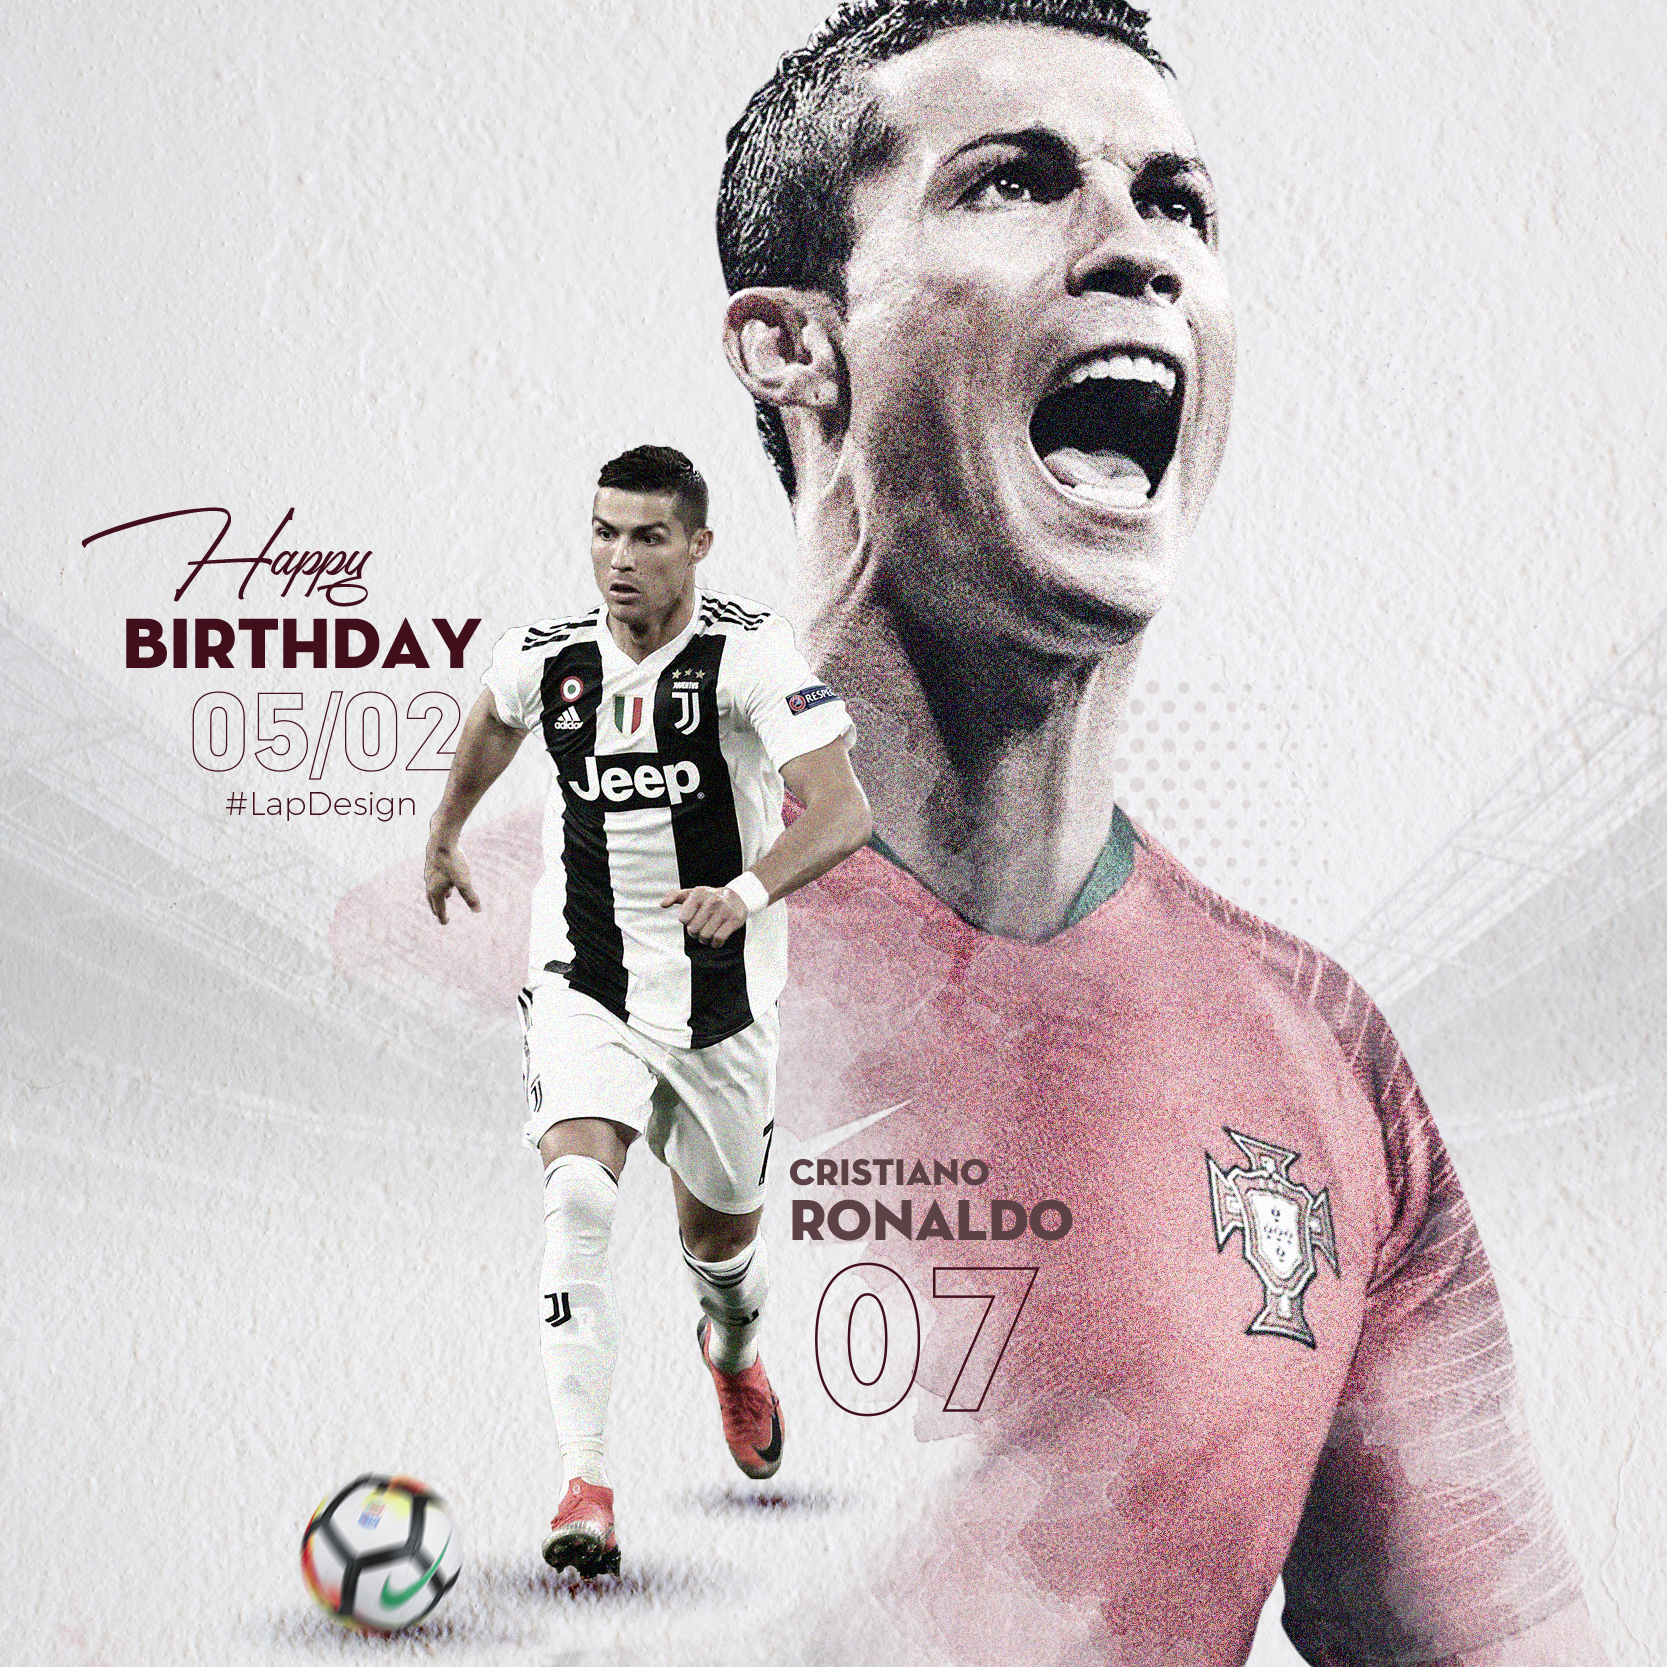 Happy Birthday C.Ronaldo. Cristiano ronaldo quotes, Ronaldo videos, Cristiano ronaldo